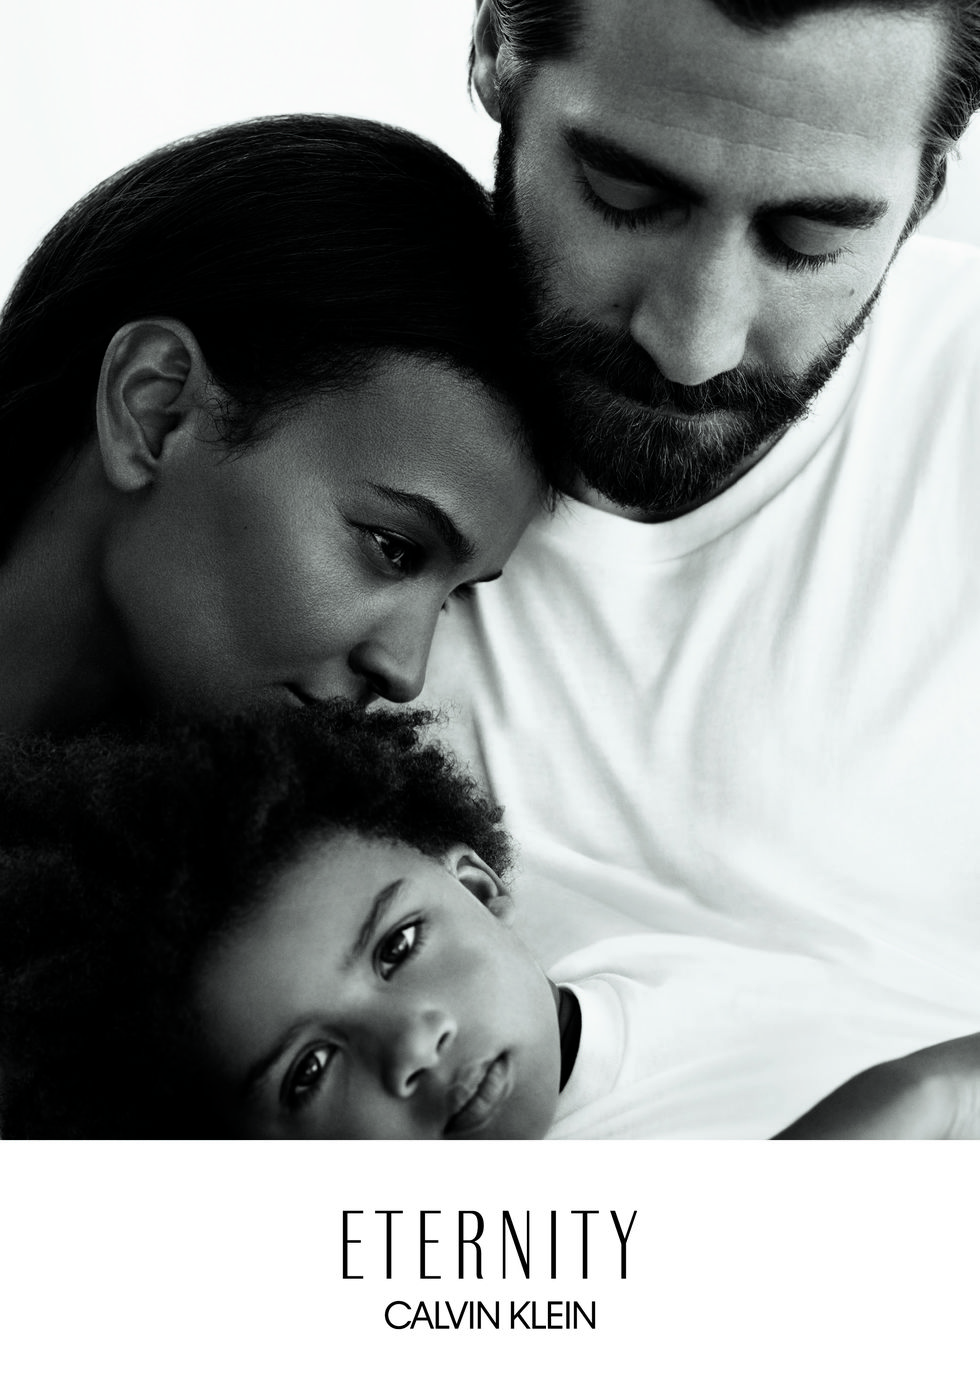 Jake Gyllenhaal Stars in Calvin Klein Ads - Jake Gyllenhaal Fronts Calvin  Klein Fragrance Campaign